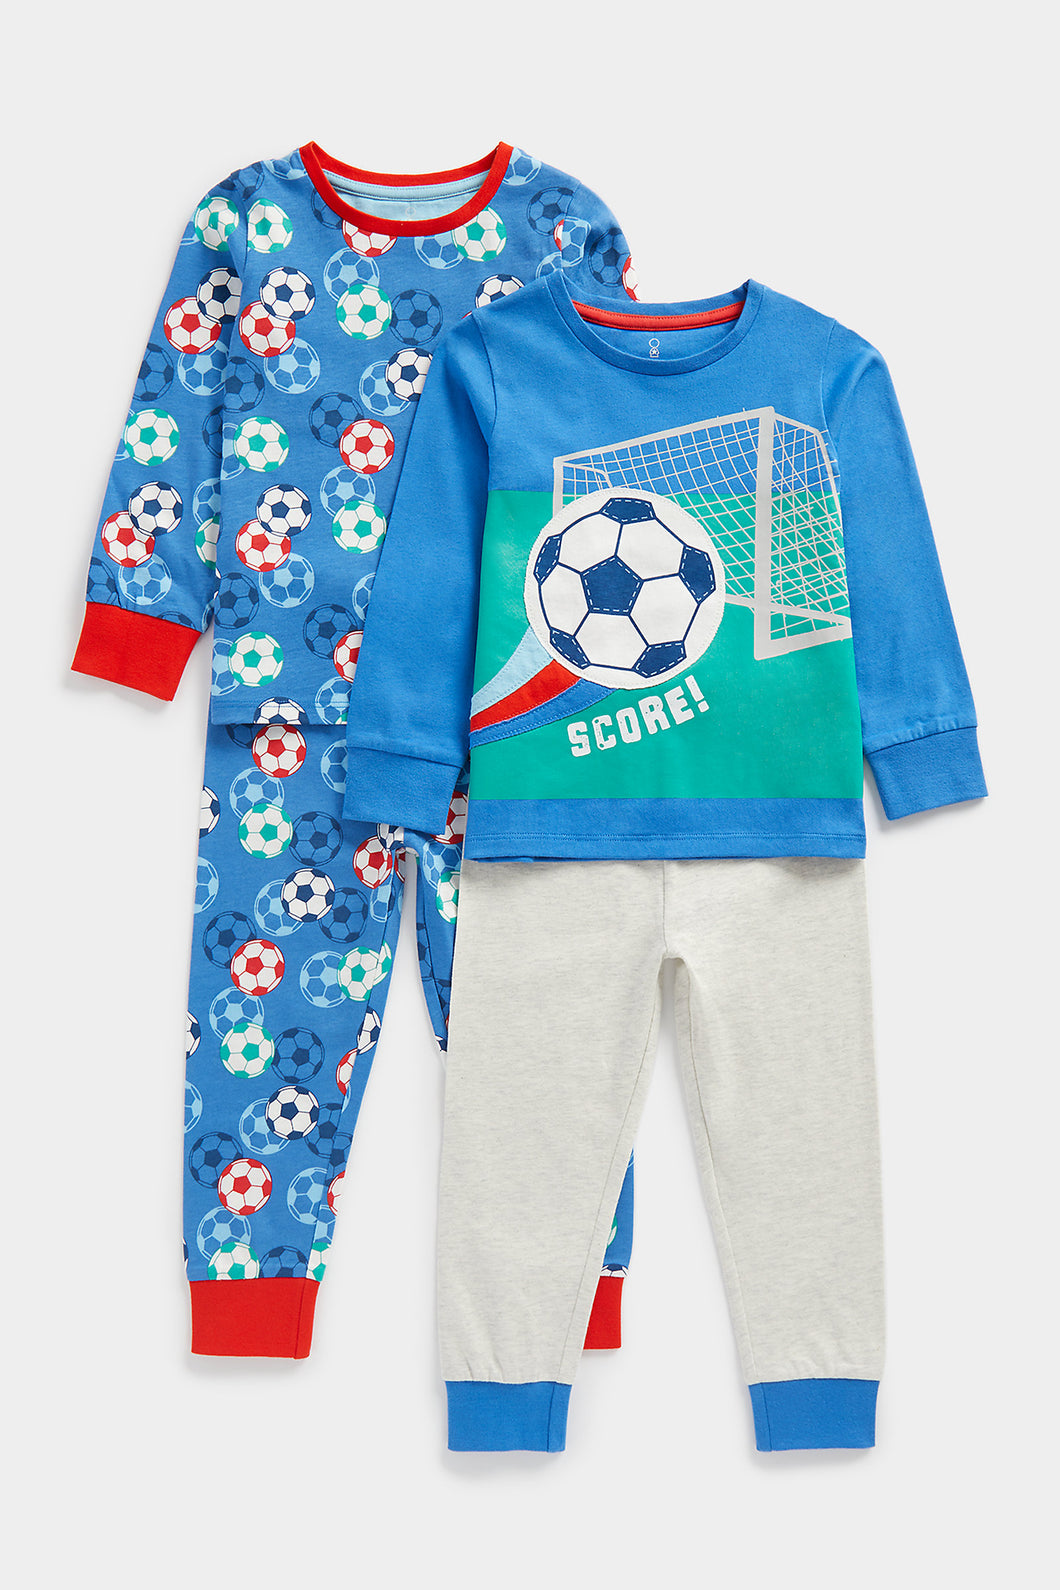 Mothercare Score Football Pyjamas - 2 Pack